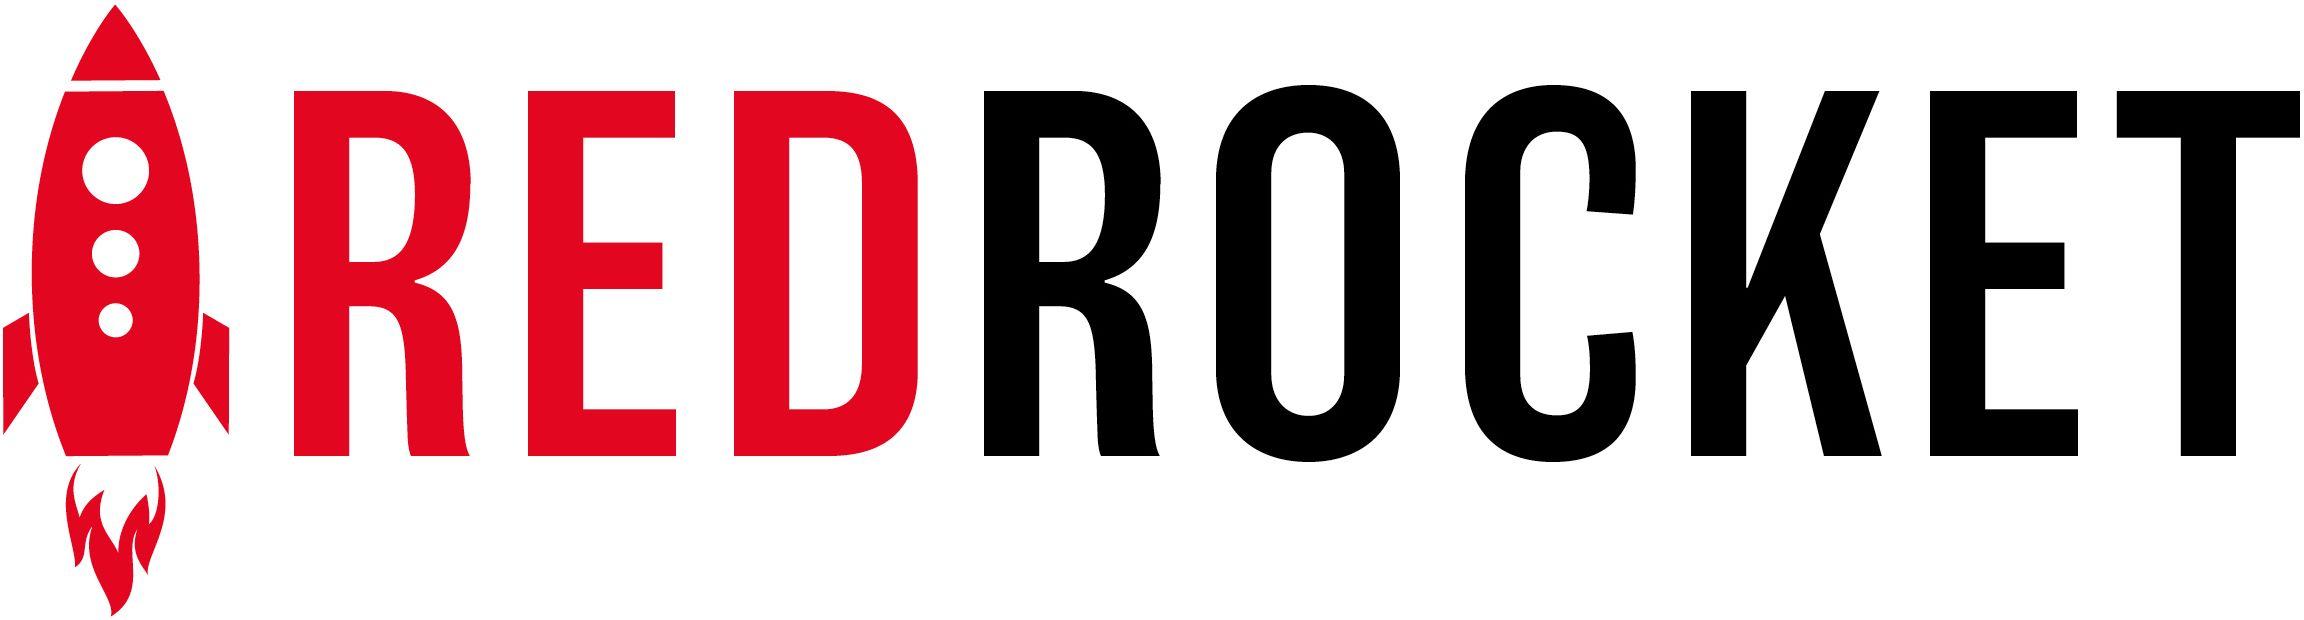 Red Rocket Logo - Creative Graphic Design, Web Design & Video Production